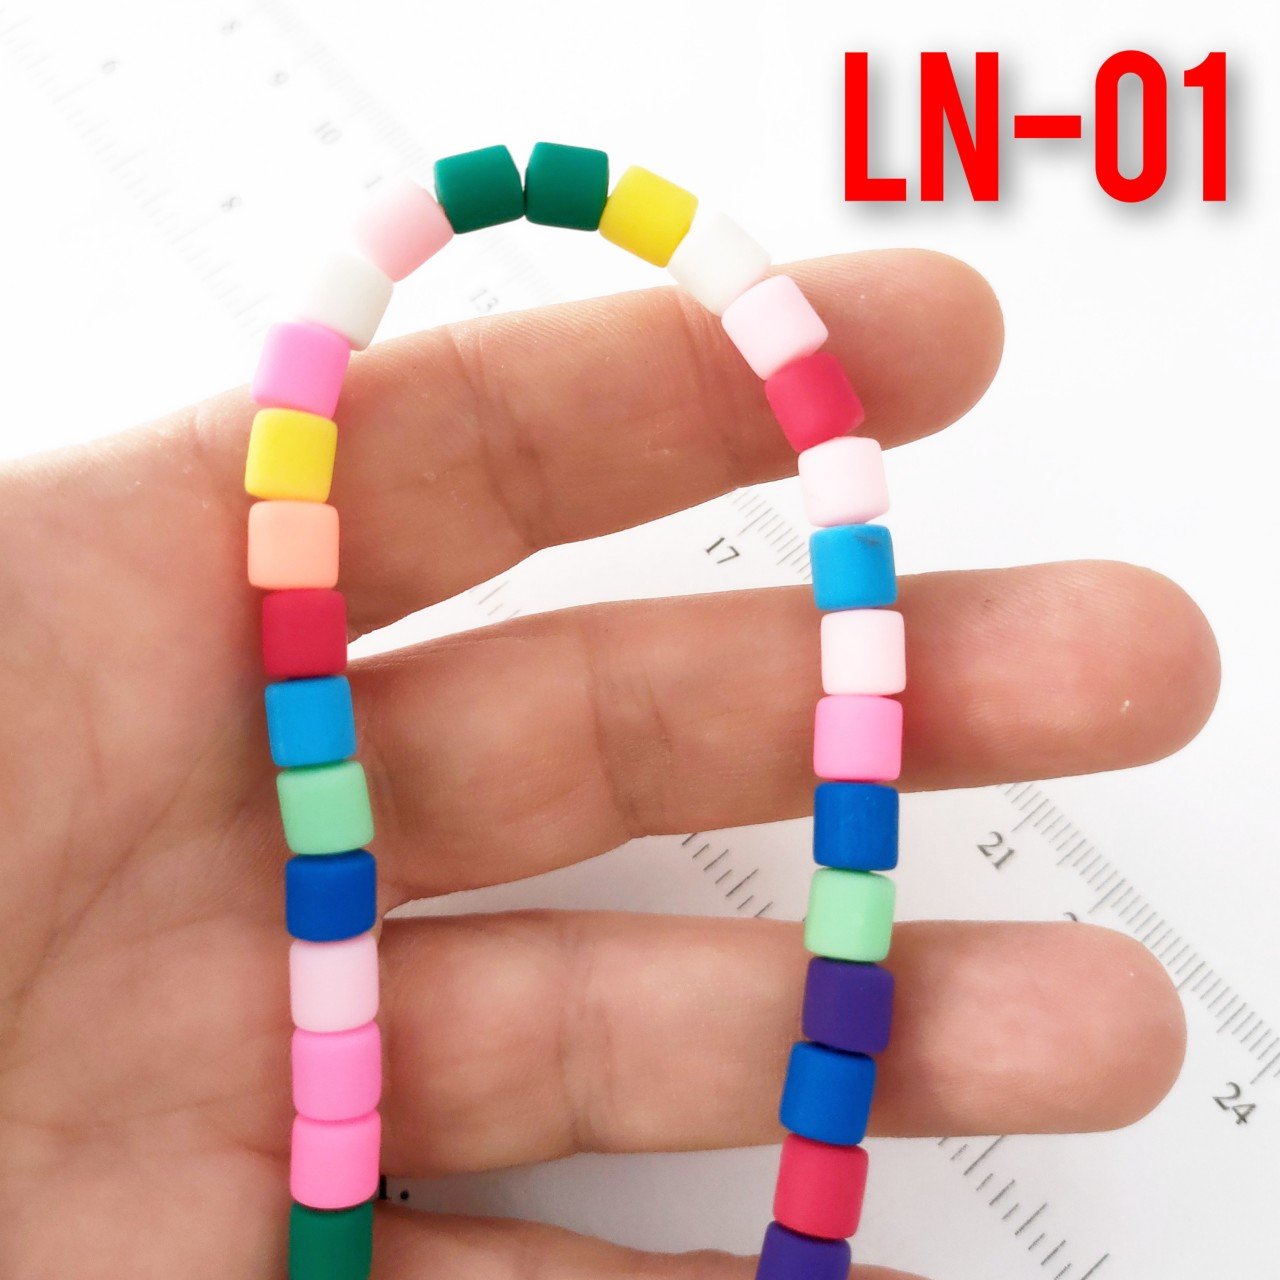 LN-01 Mix Renk Lino Boncuk 6 mm